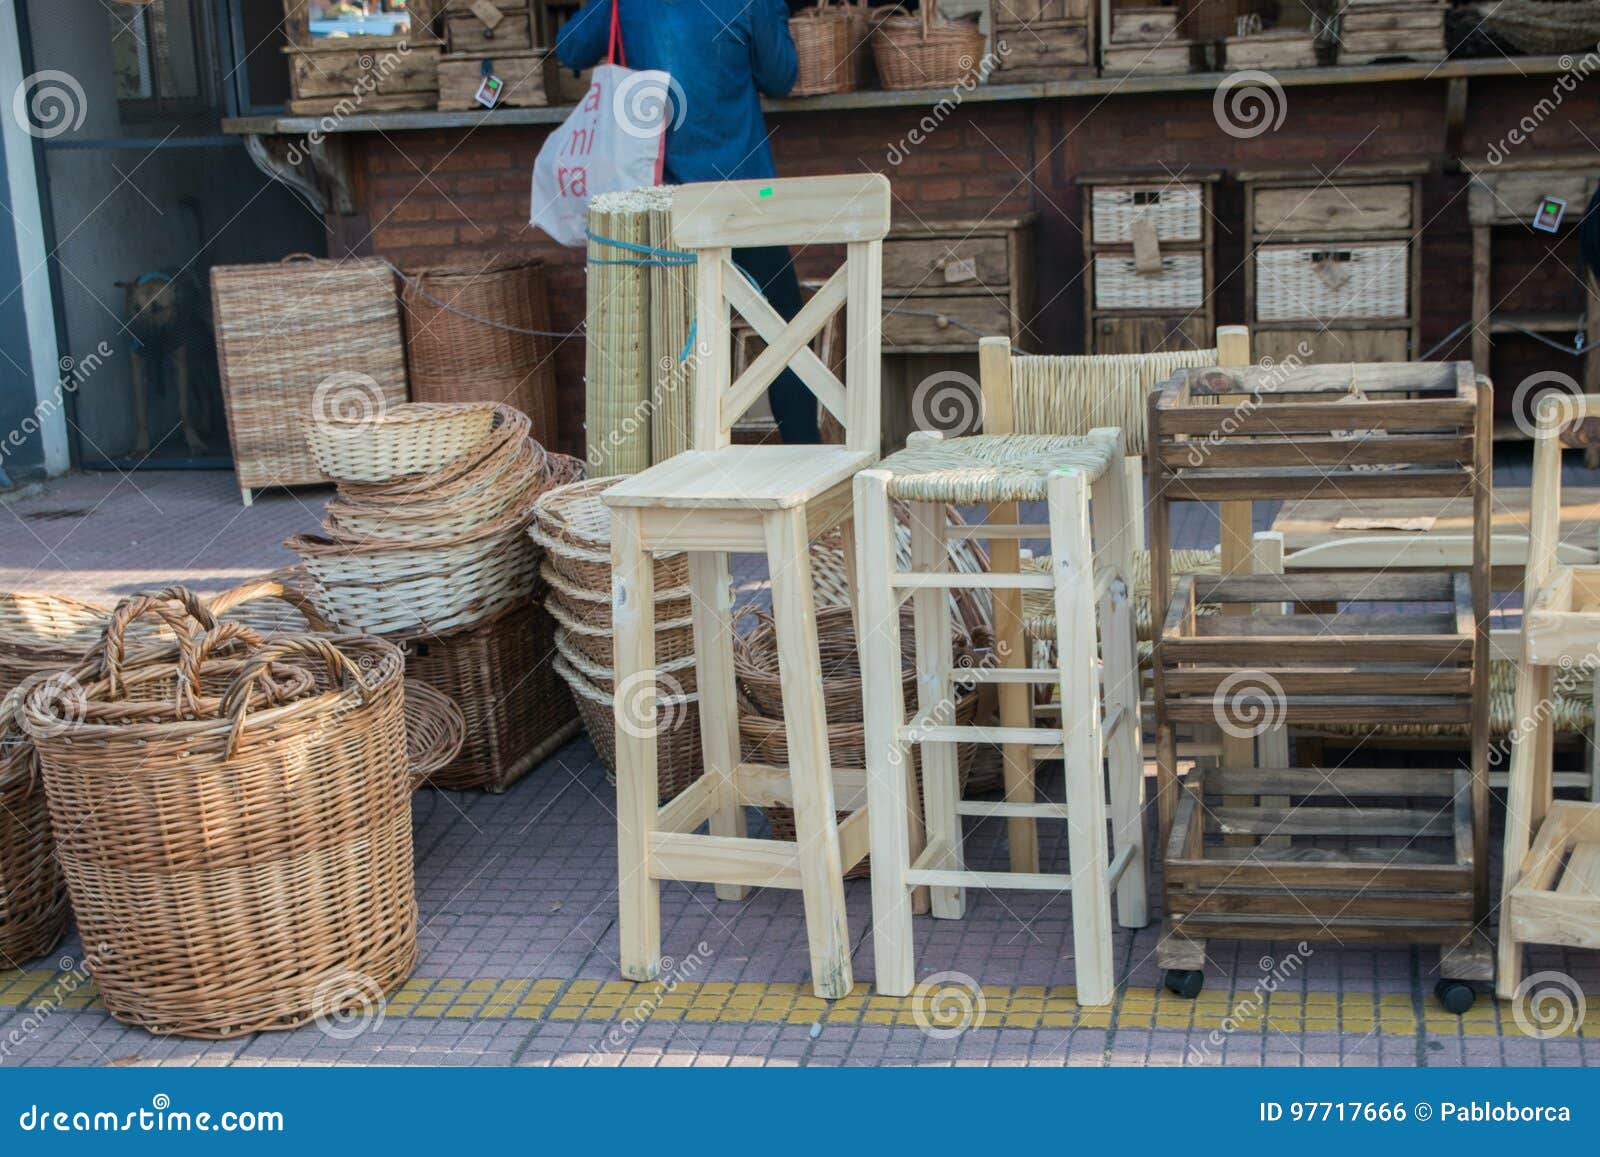 wooden furniture for sale at puerto de frutos in tigre city, buenos aires